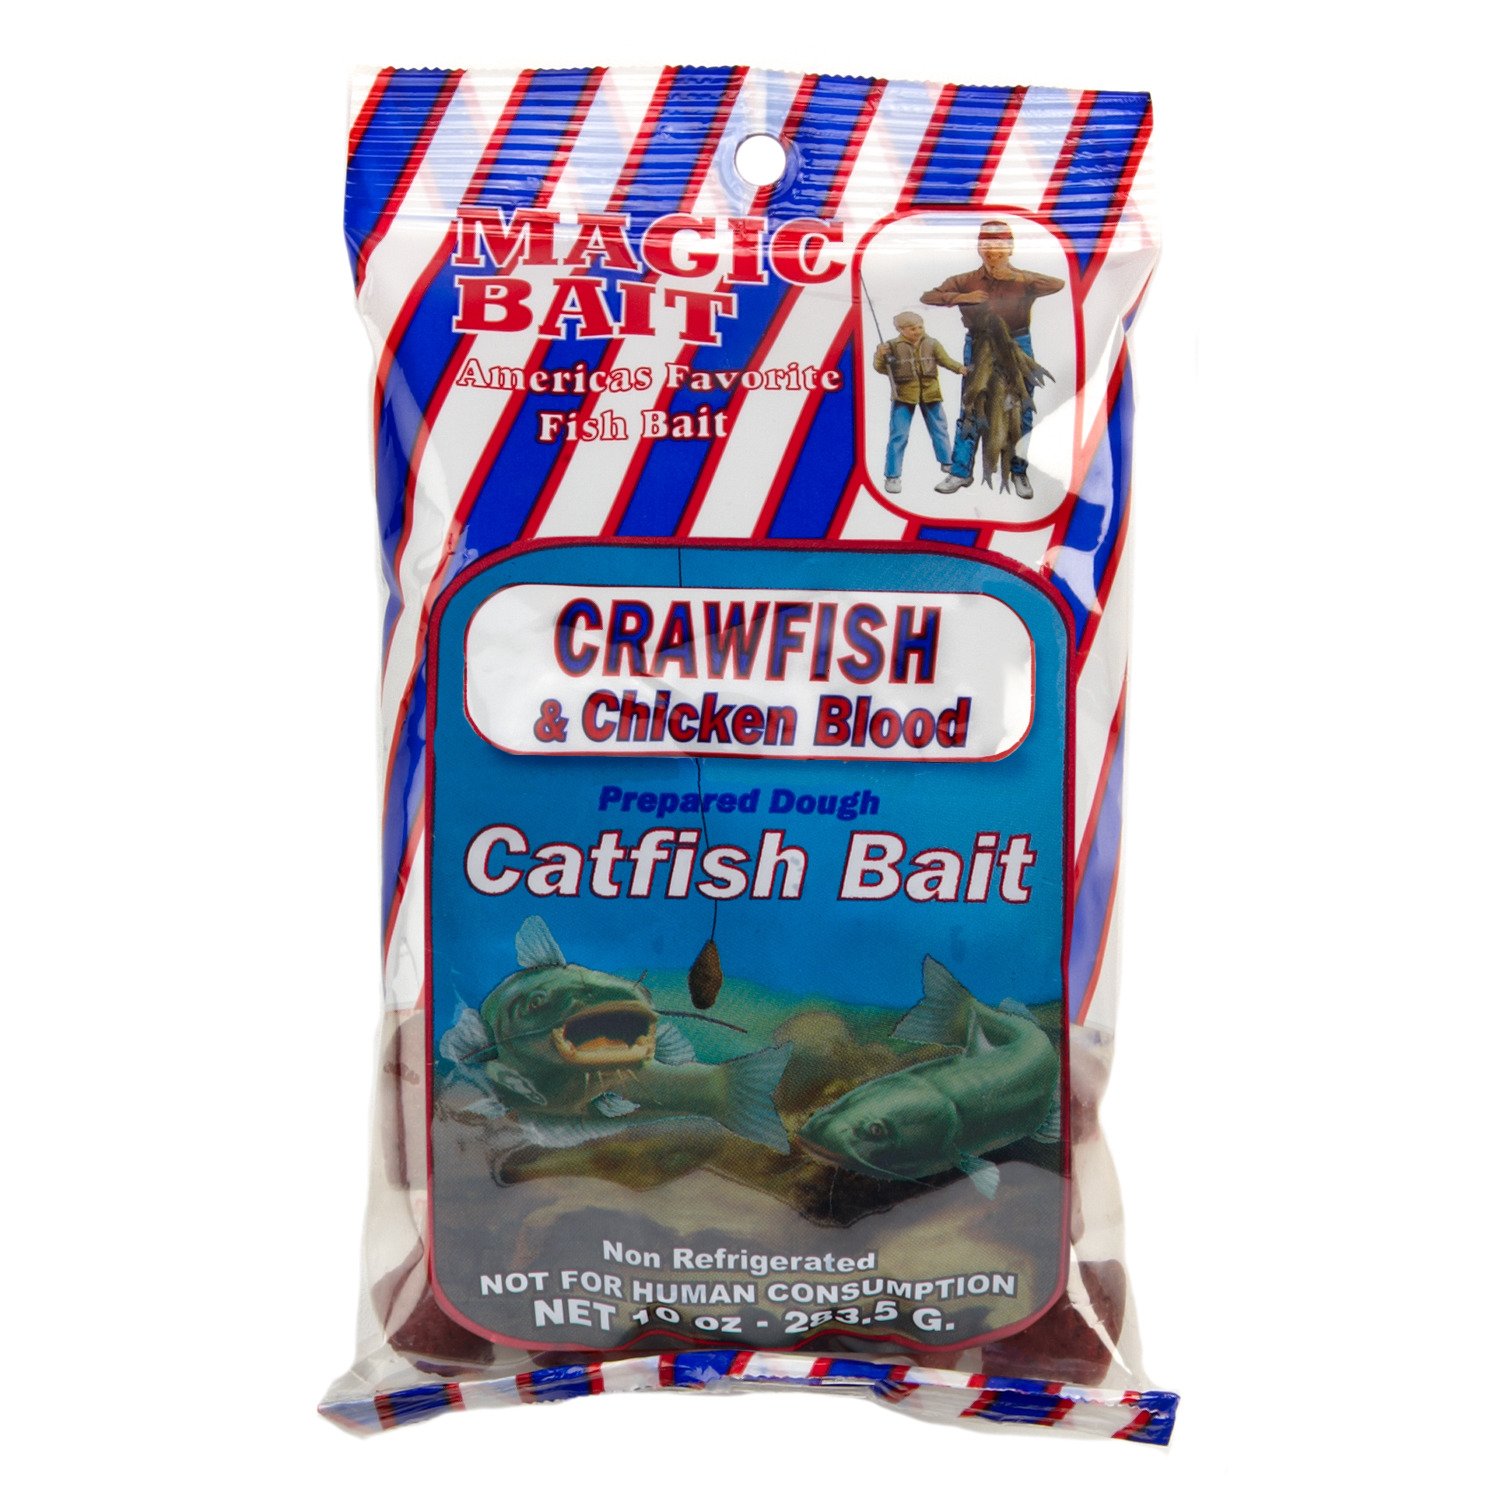 Magic Bait 10 oz. Crawfish and Chicken Blood Catfish Bait